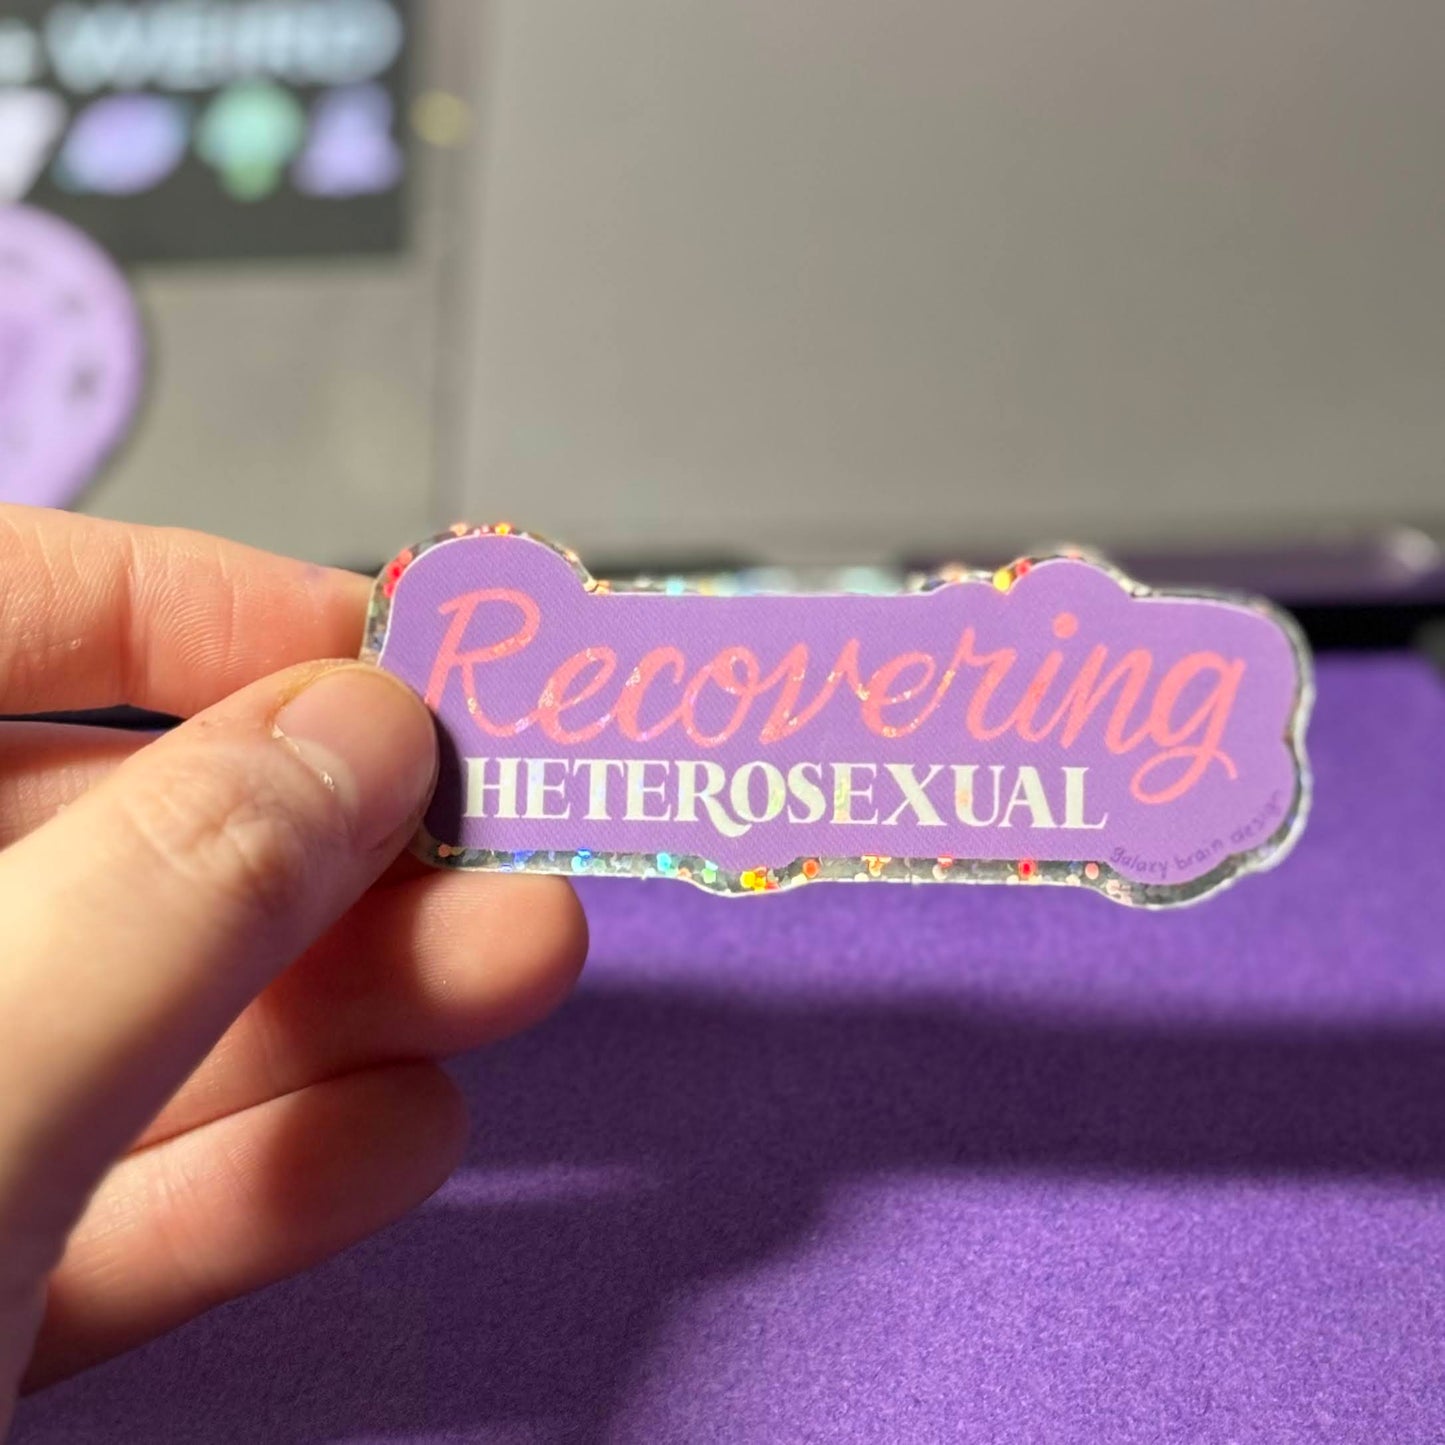 Recovering Heterosexual Holo Sticker